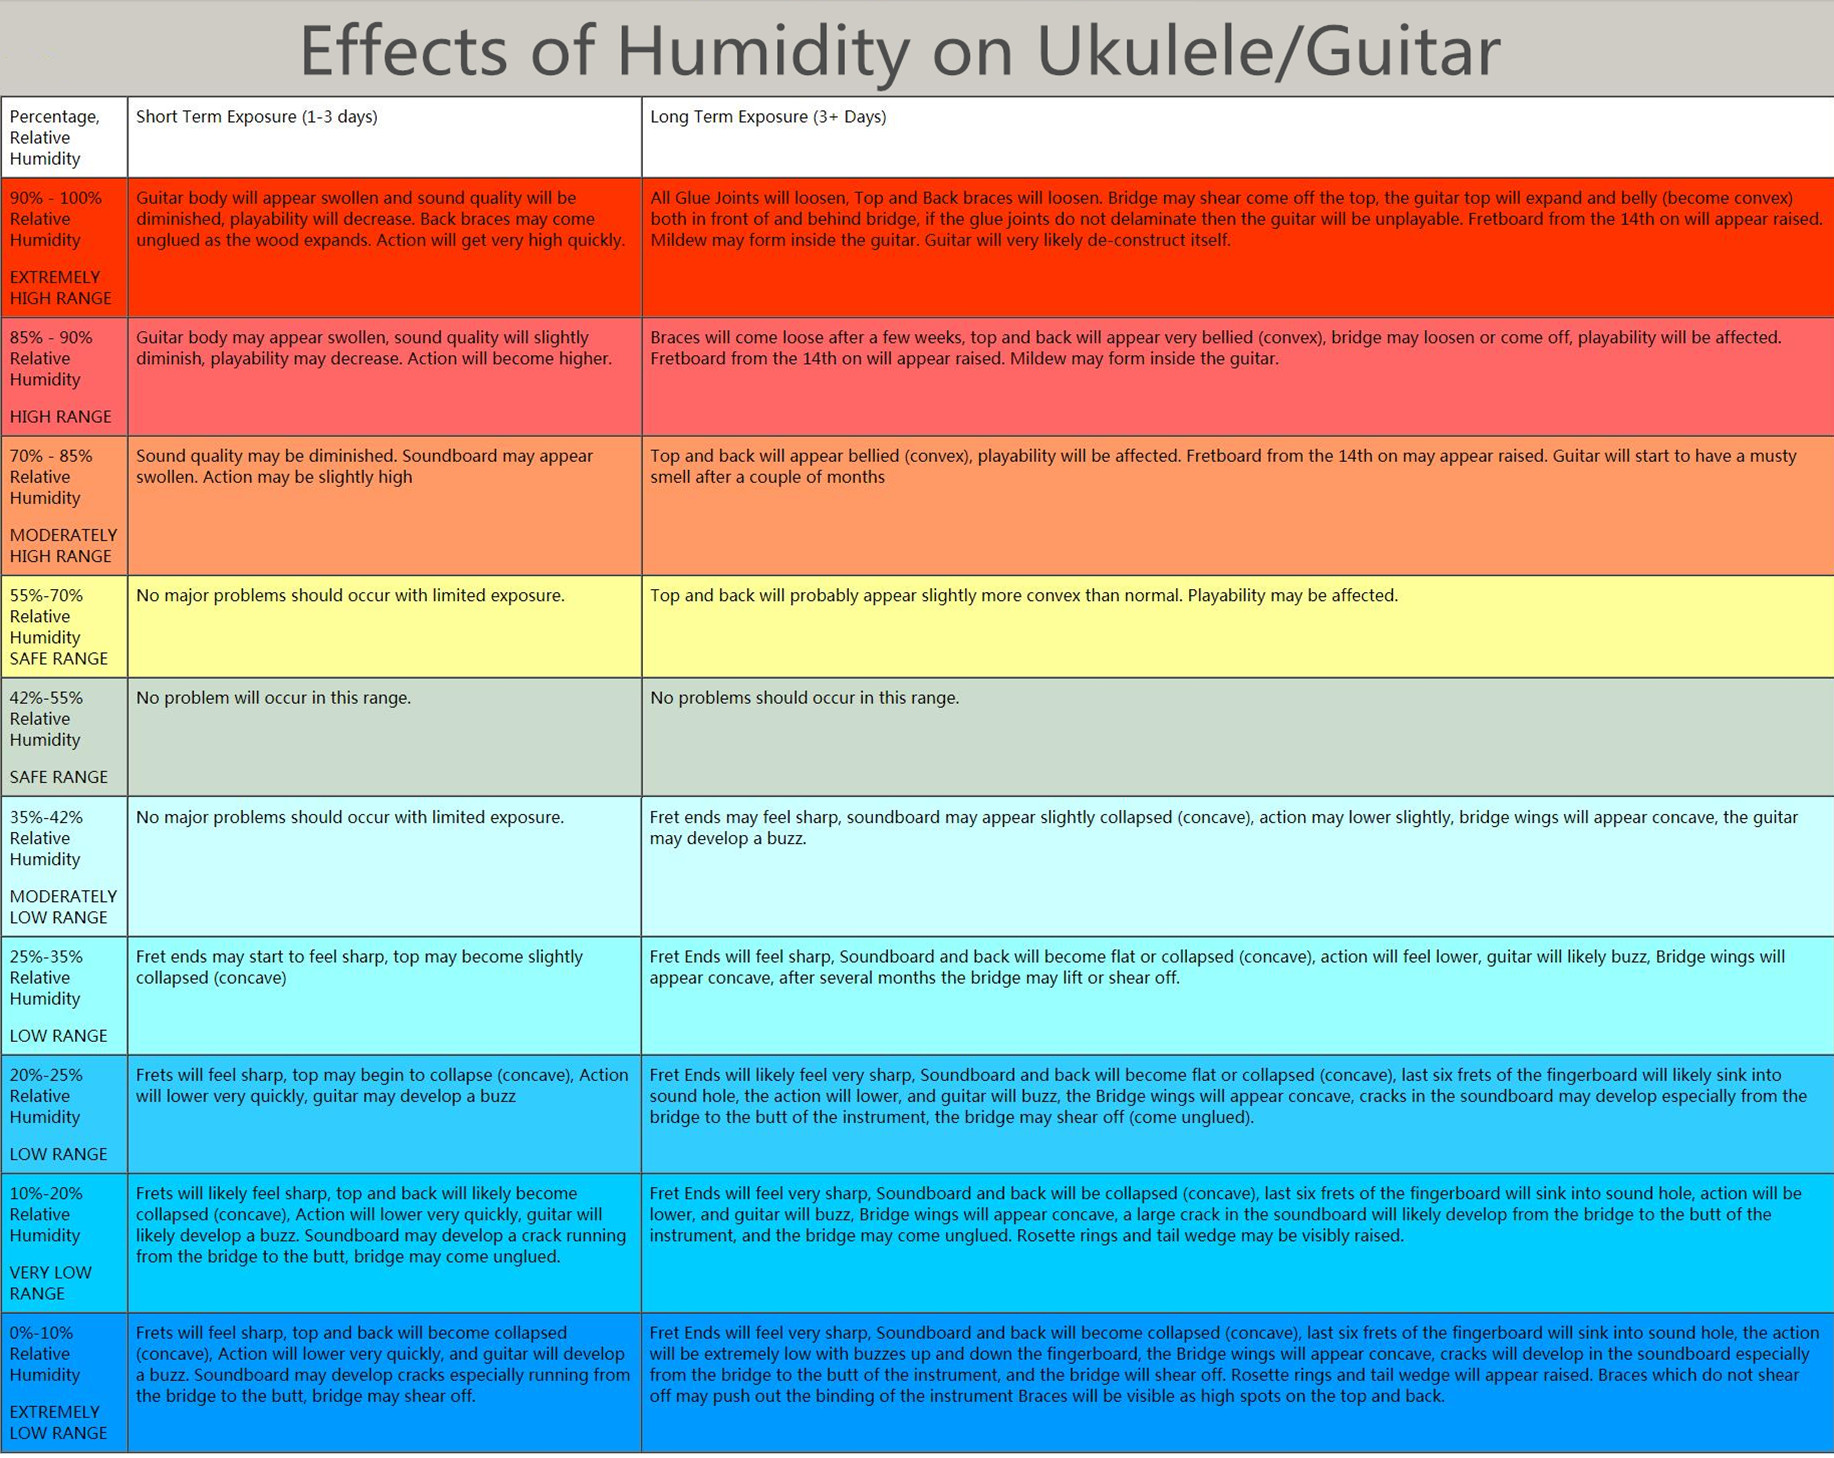 Effects of Humidity on Ukulele or Guitar